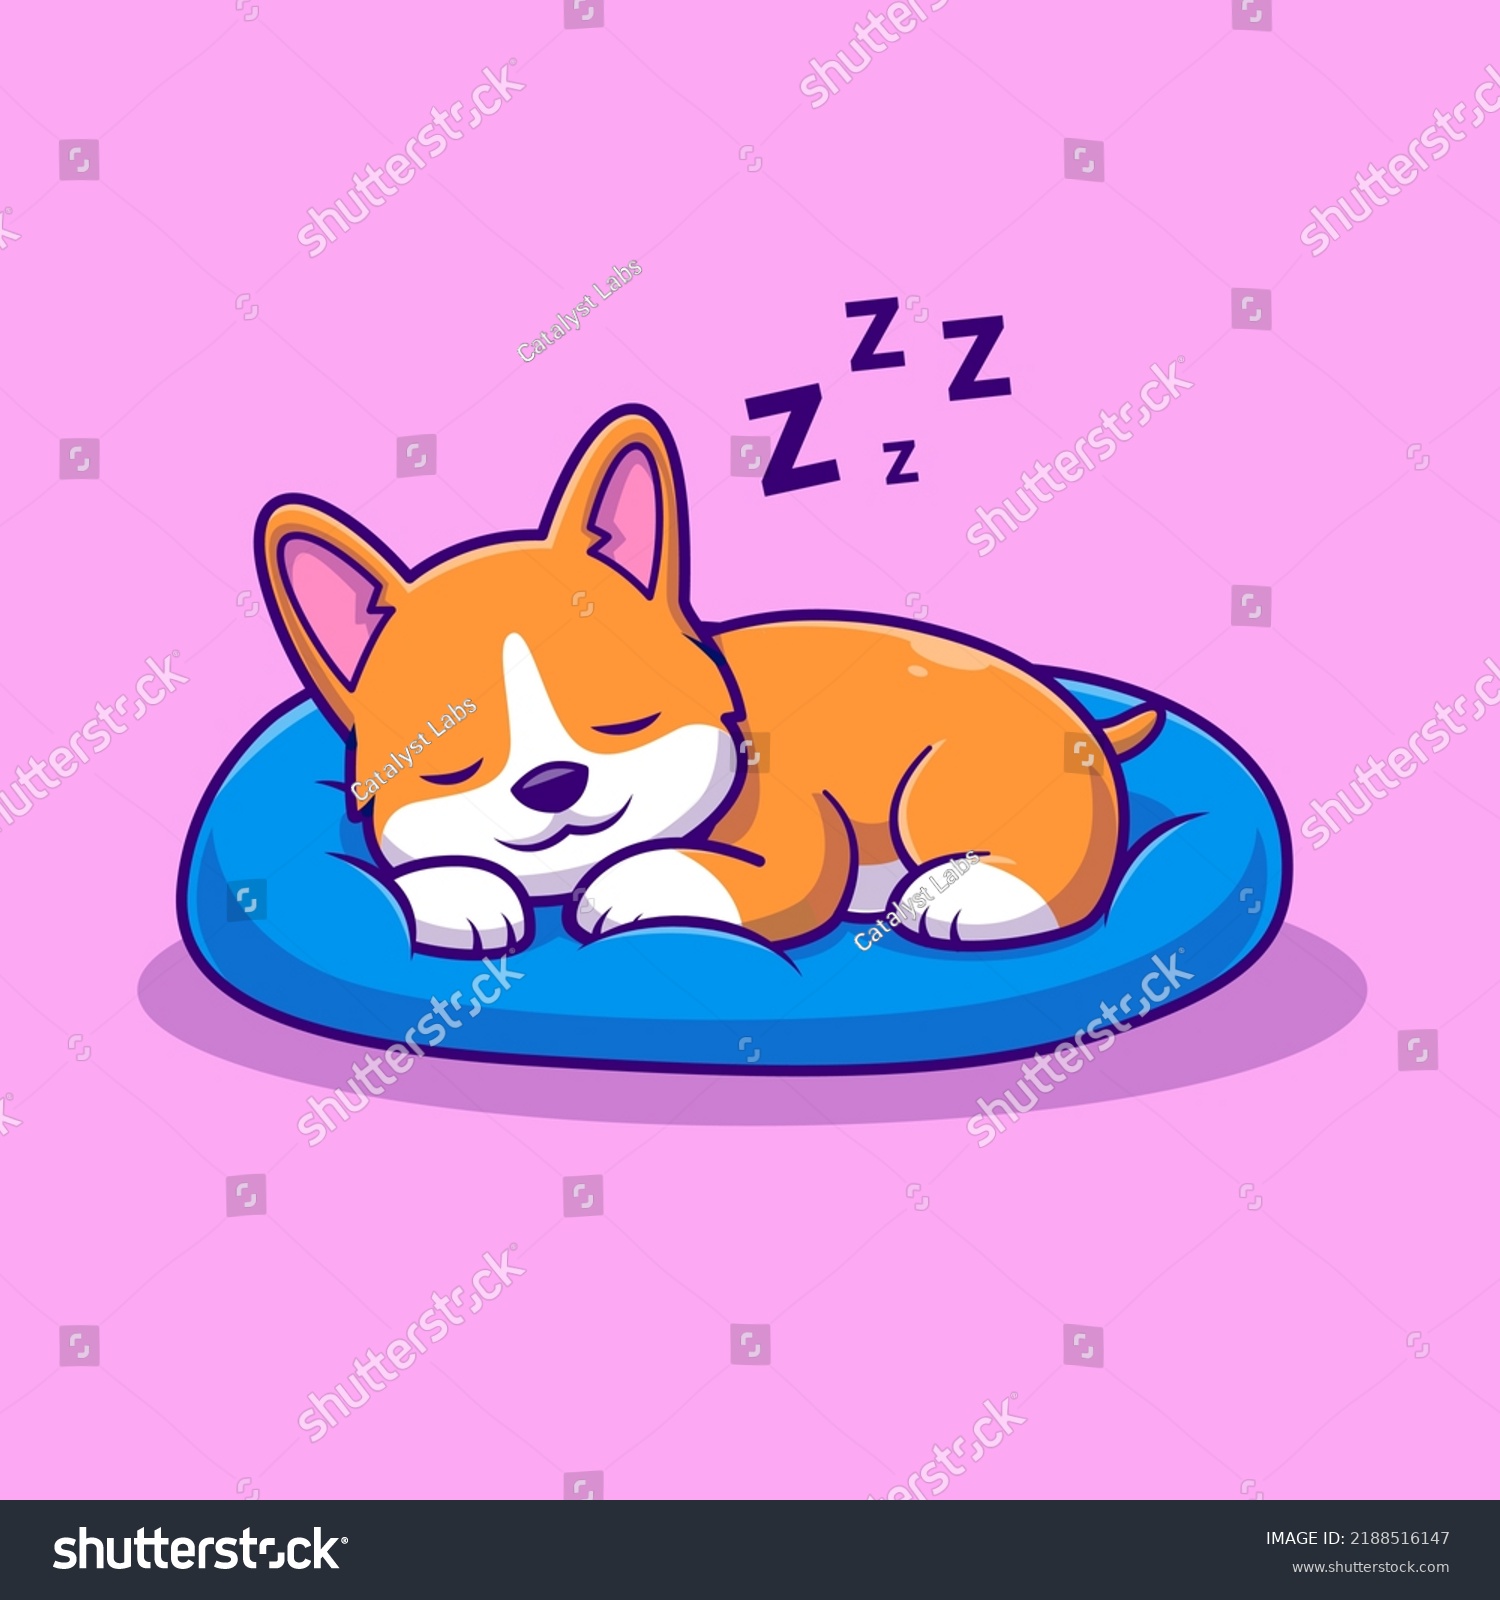 SVG of Cute Corgi Dog Sleeping On Pillow Cartoon Vector Icon Illustration. Animal Nature Icon Concept Isolated Premium Vector. Flat Cartoon Style svg